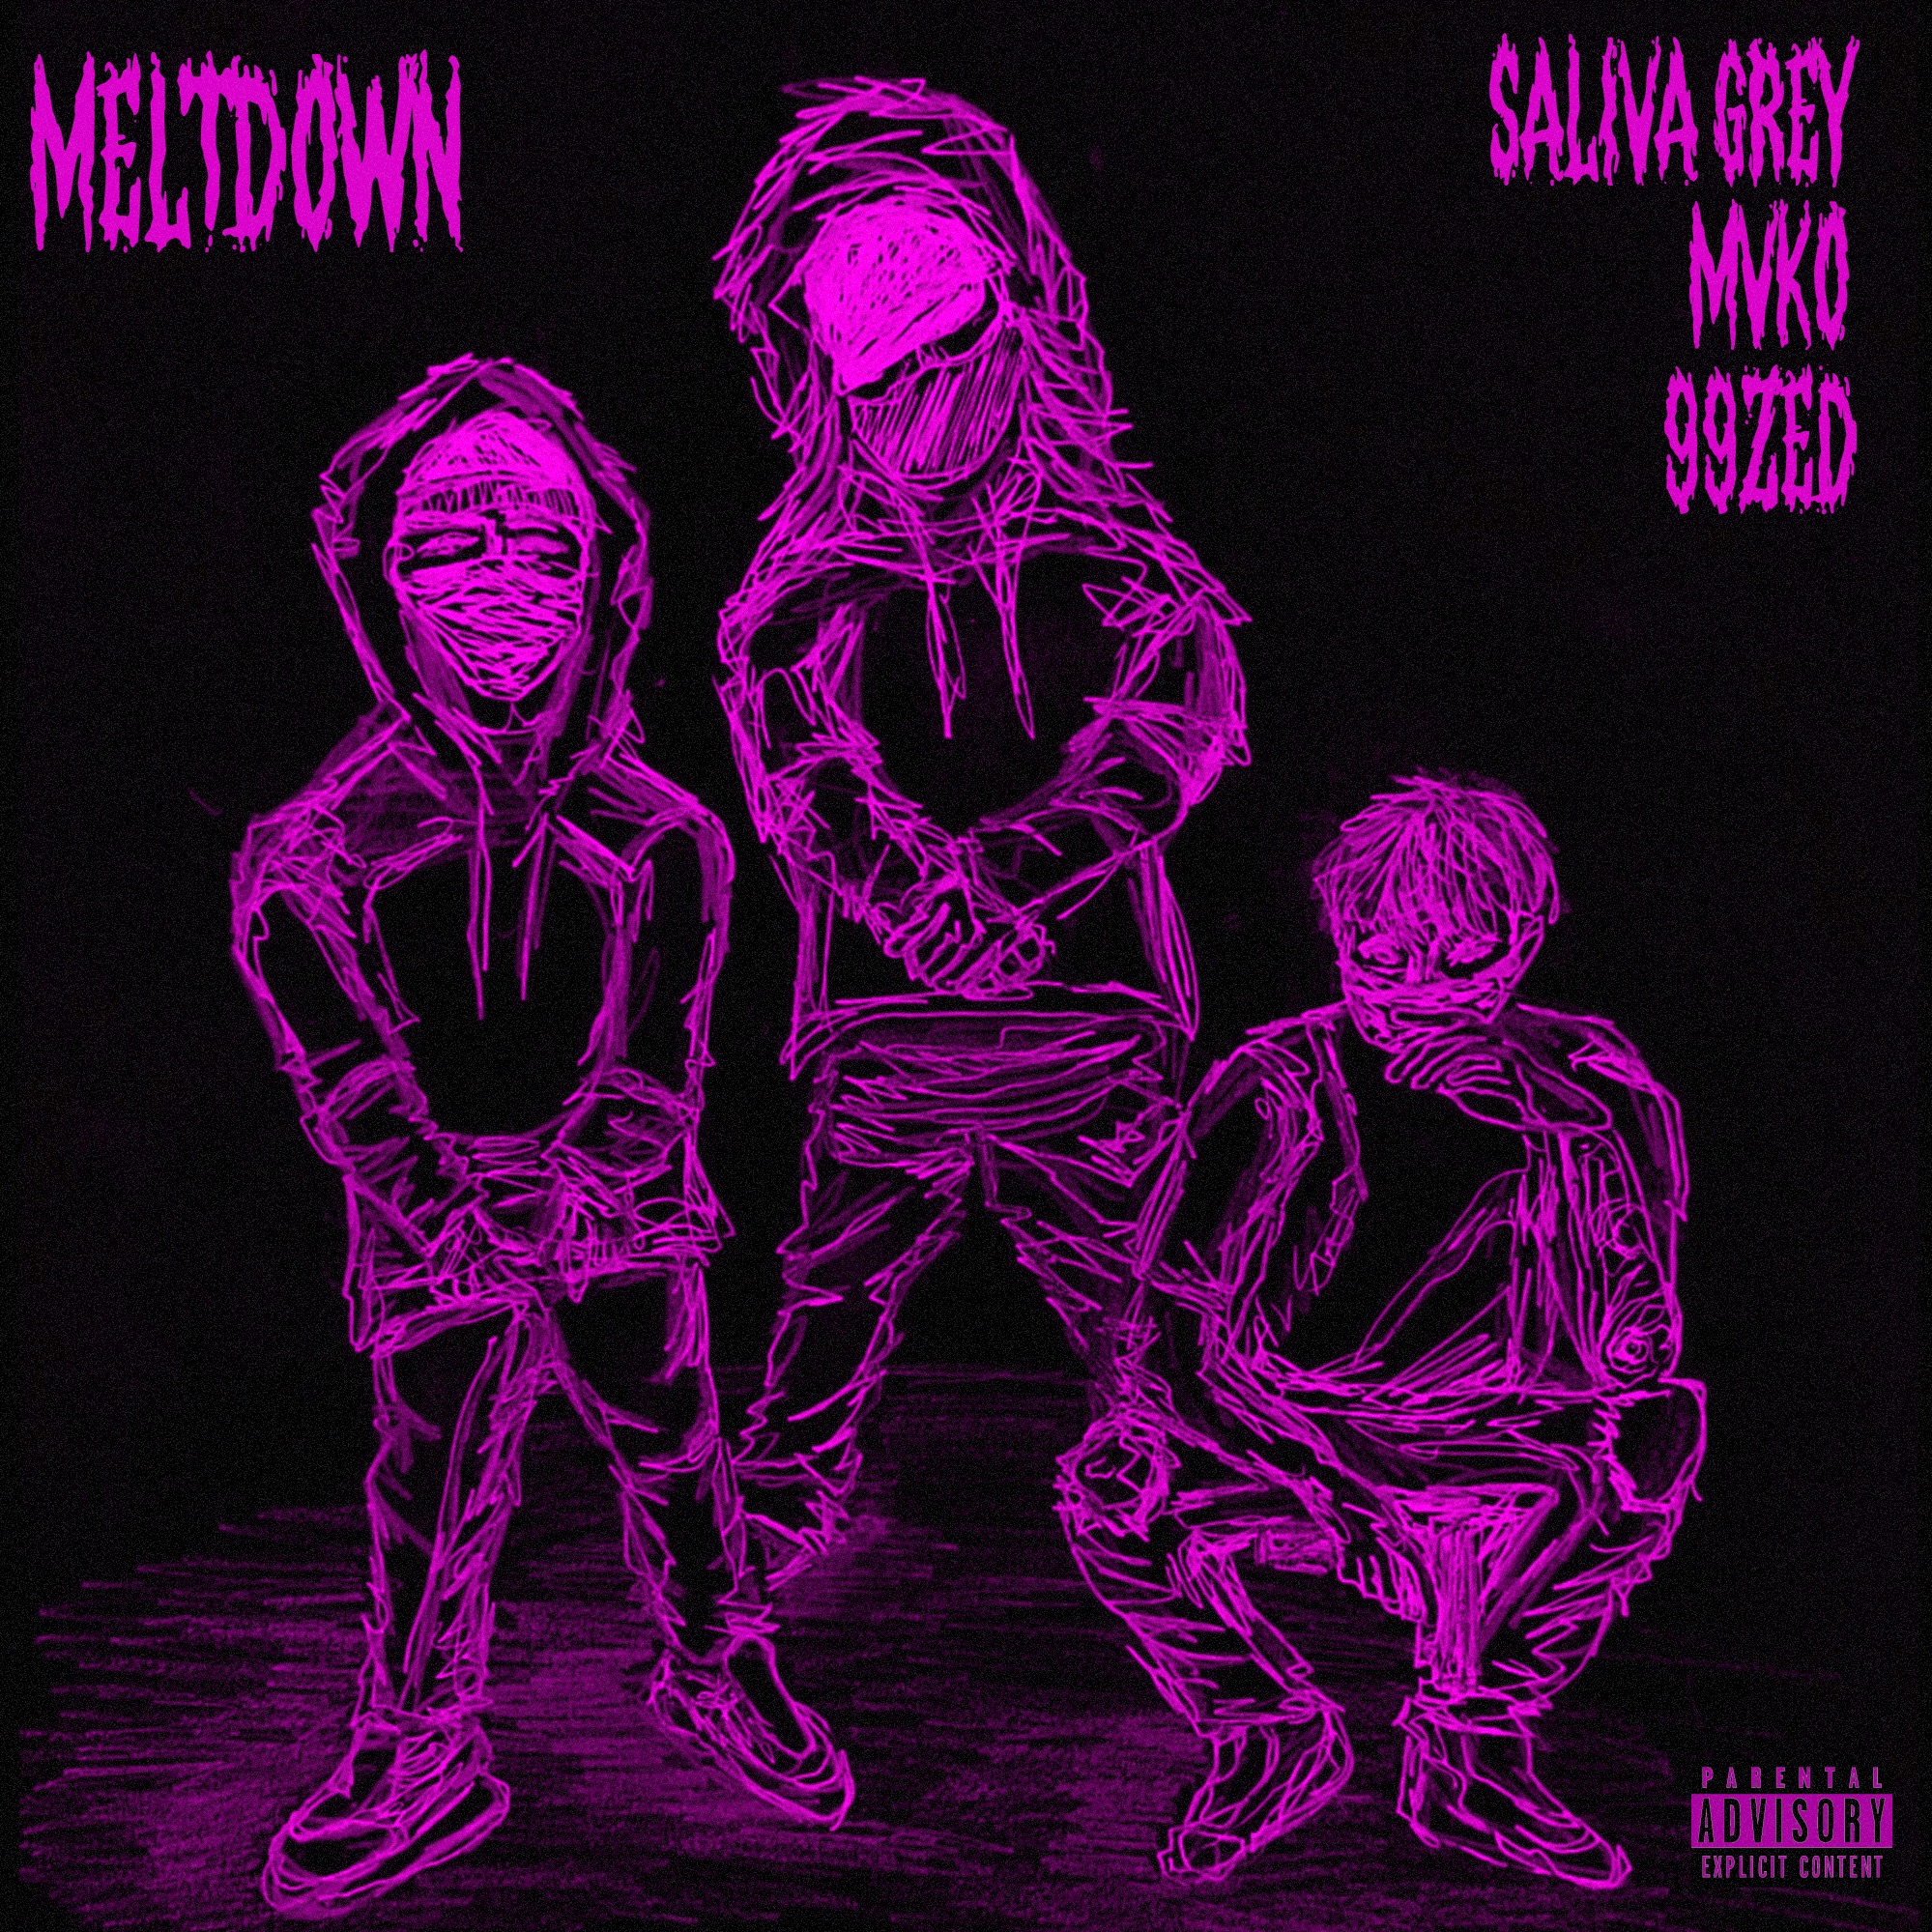 Download SALIVA GREY x MVKO x 99ZED - MELTDOWN